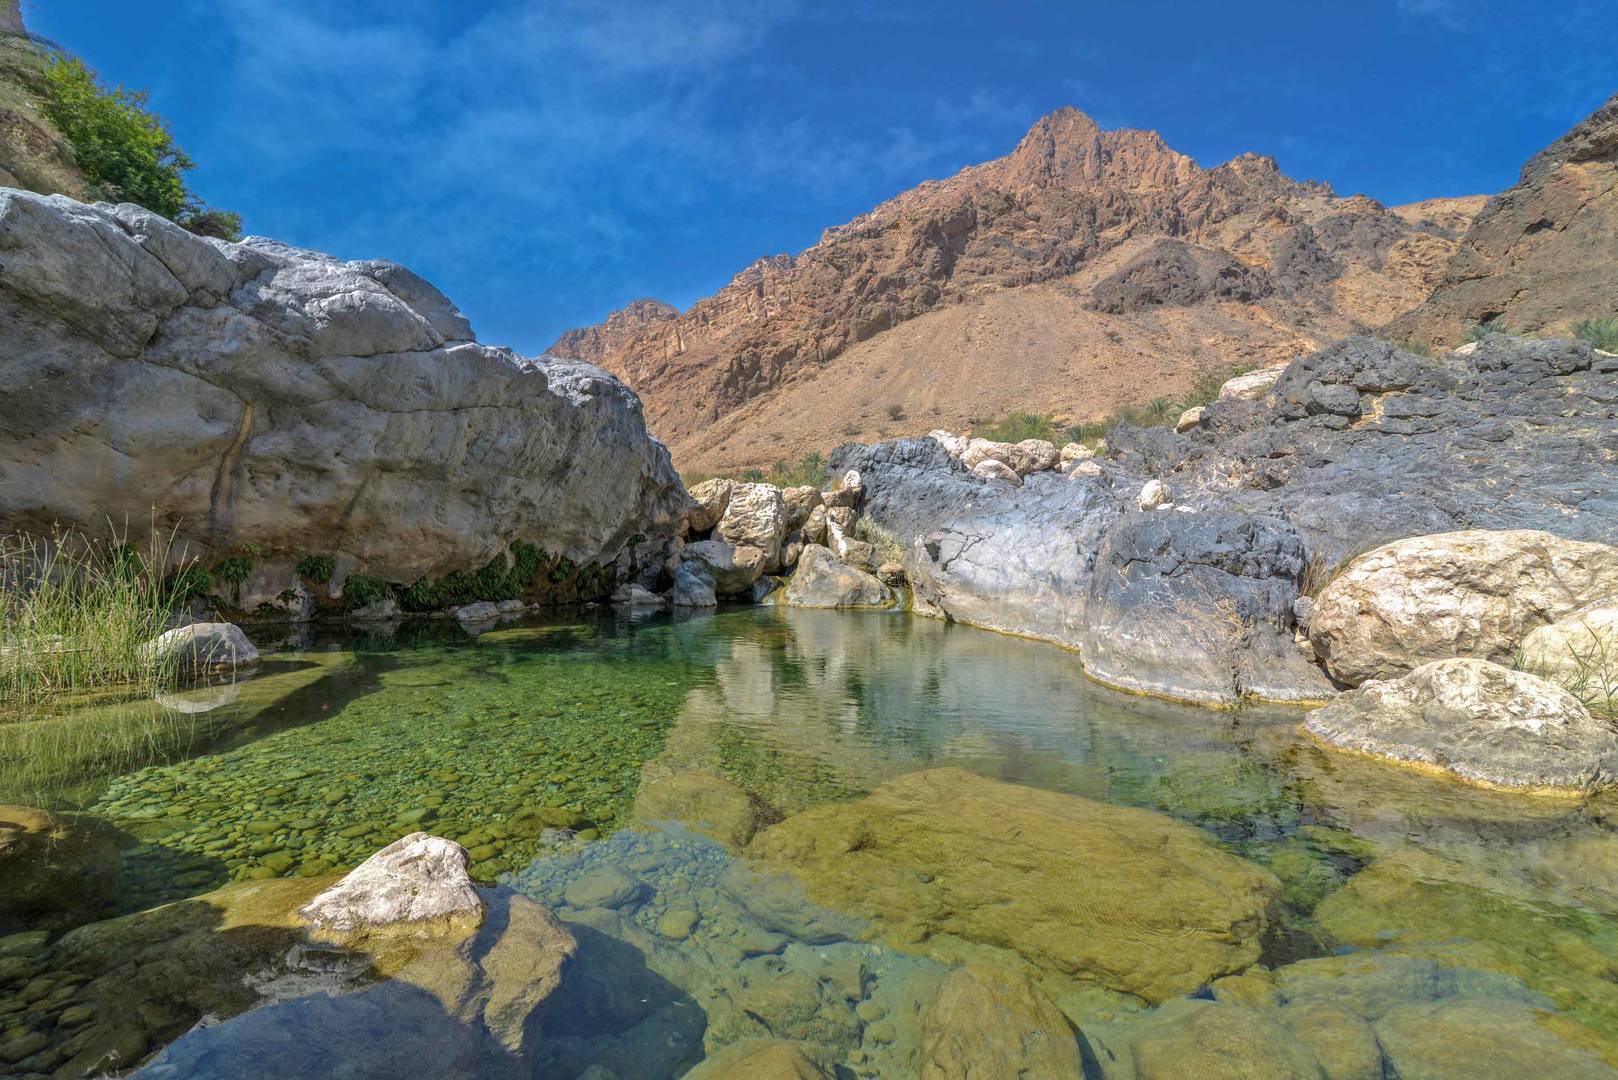 Wadi Al Arbeieen in Oman